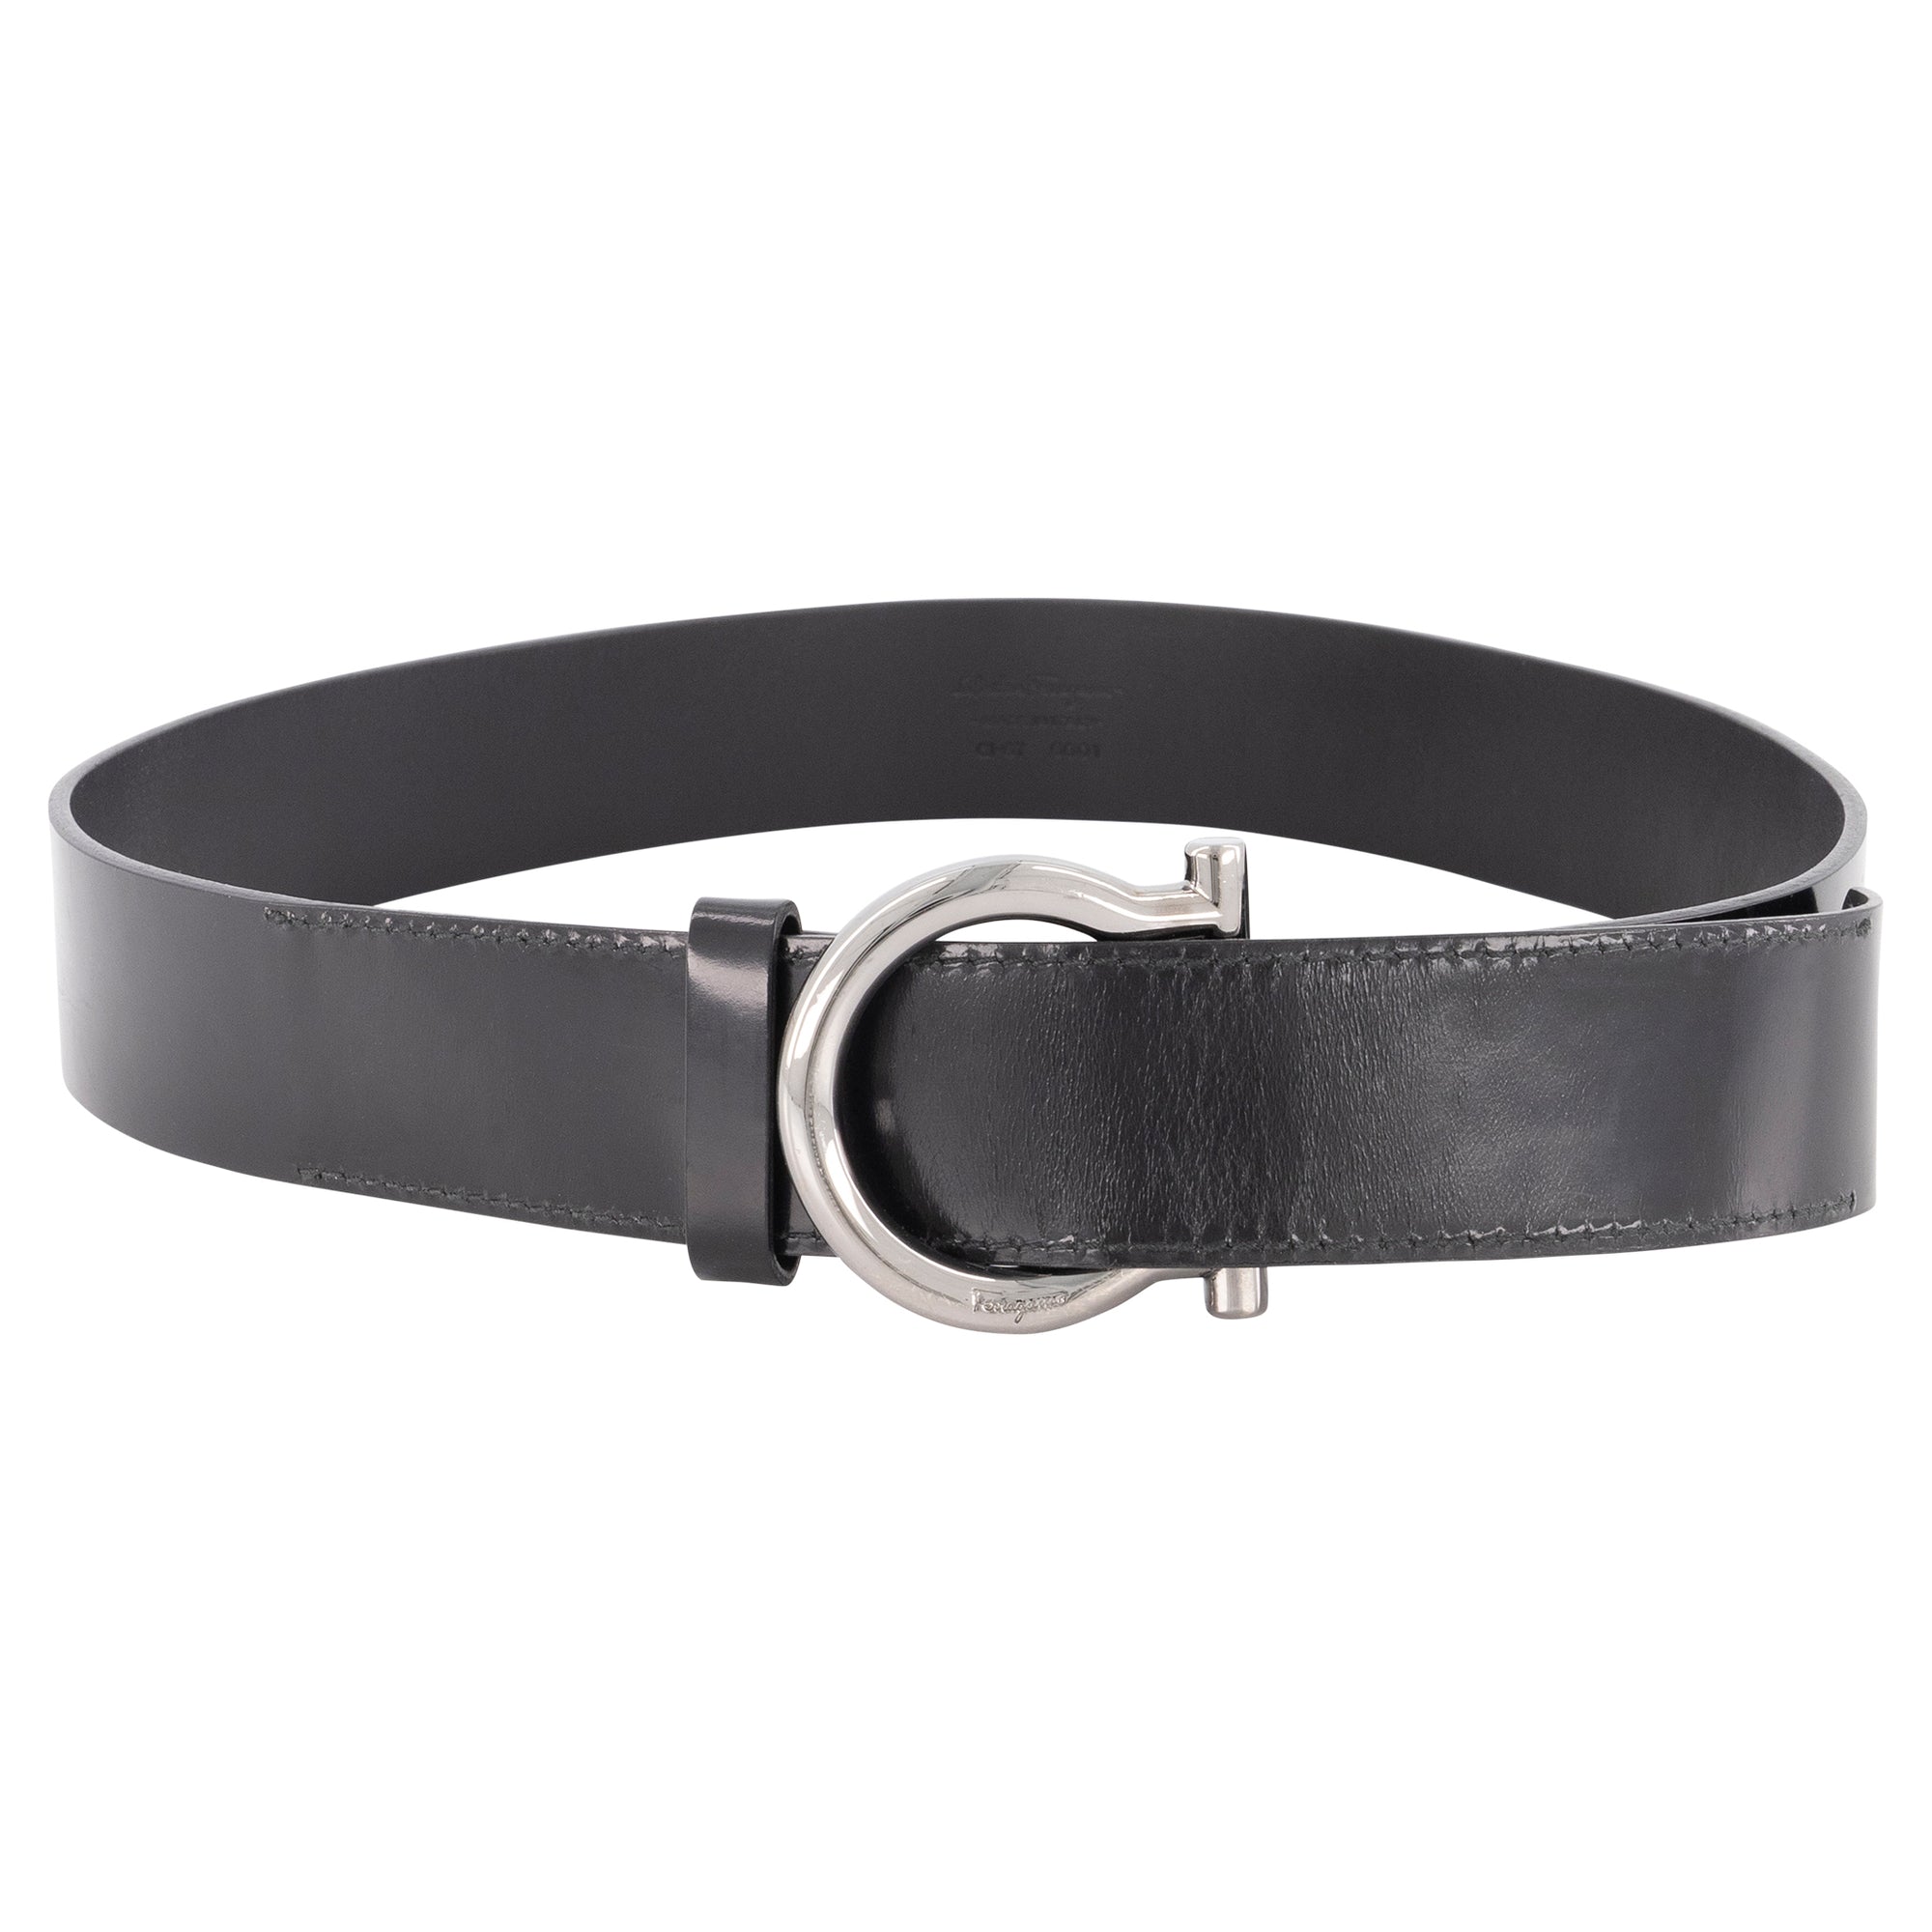 Salvatore Ferragamo black leather belt